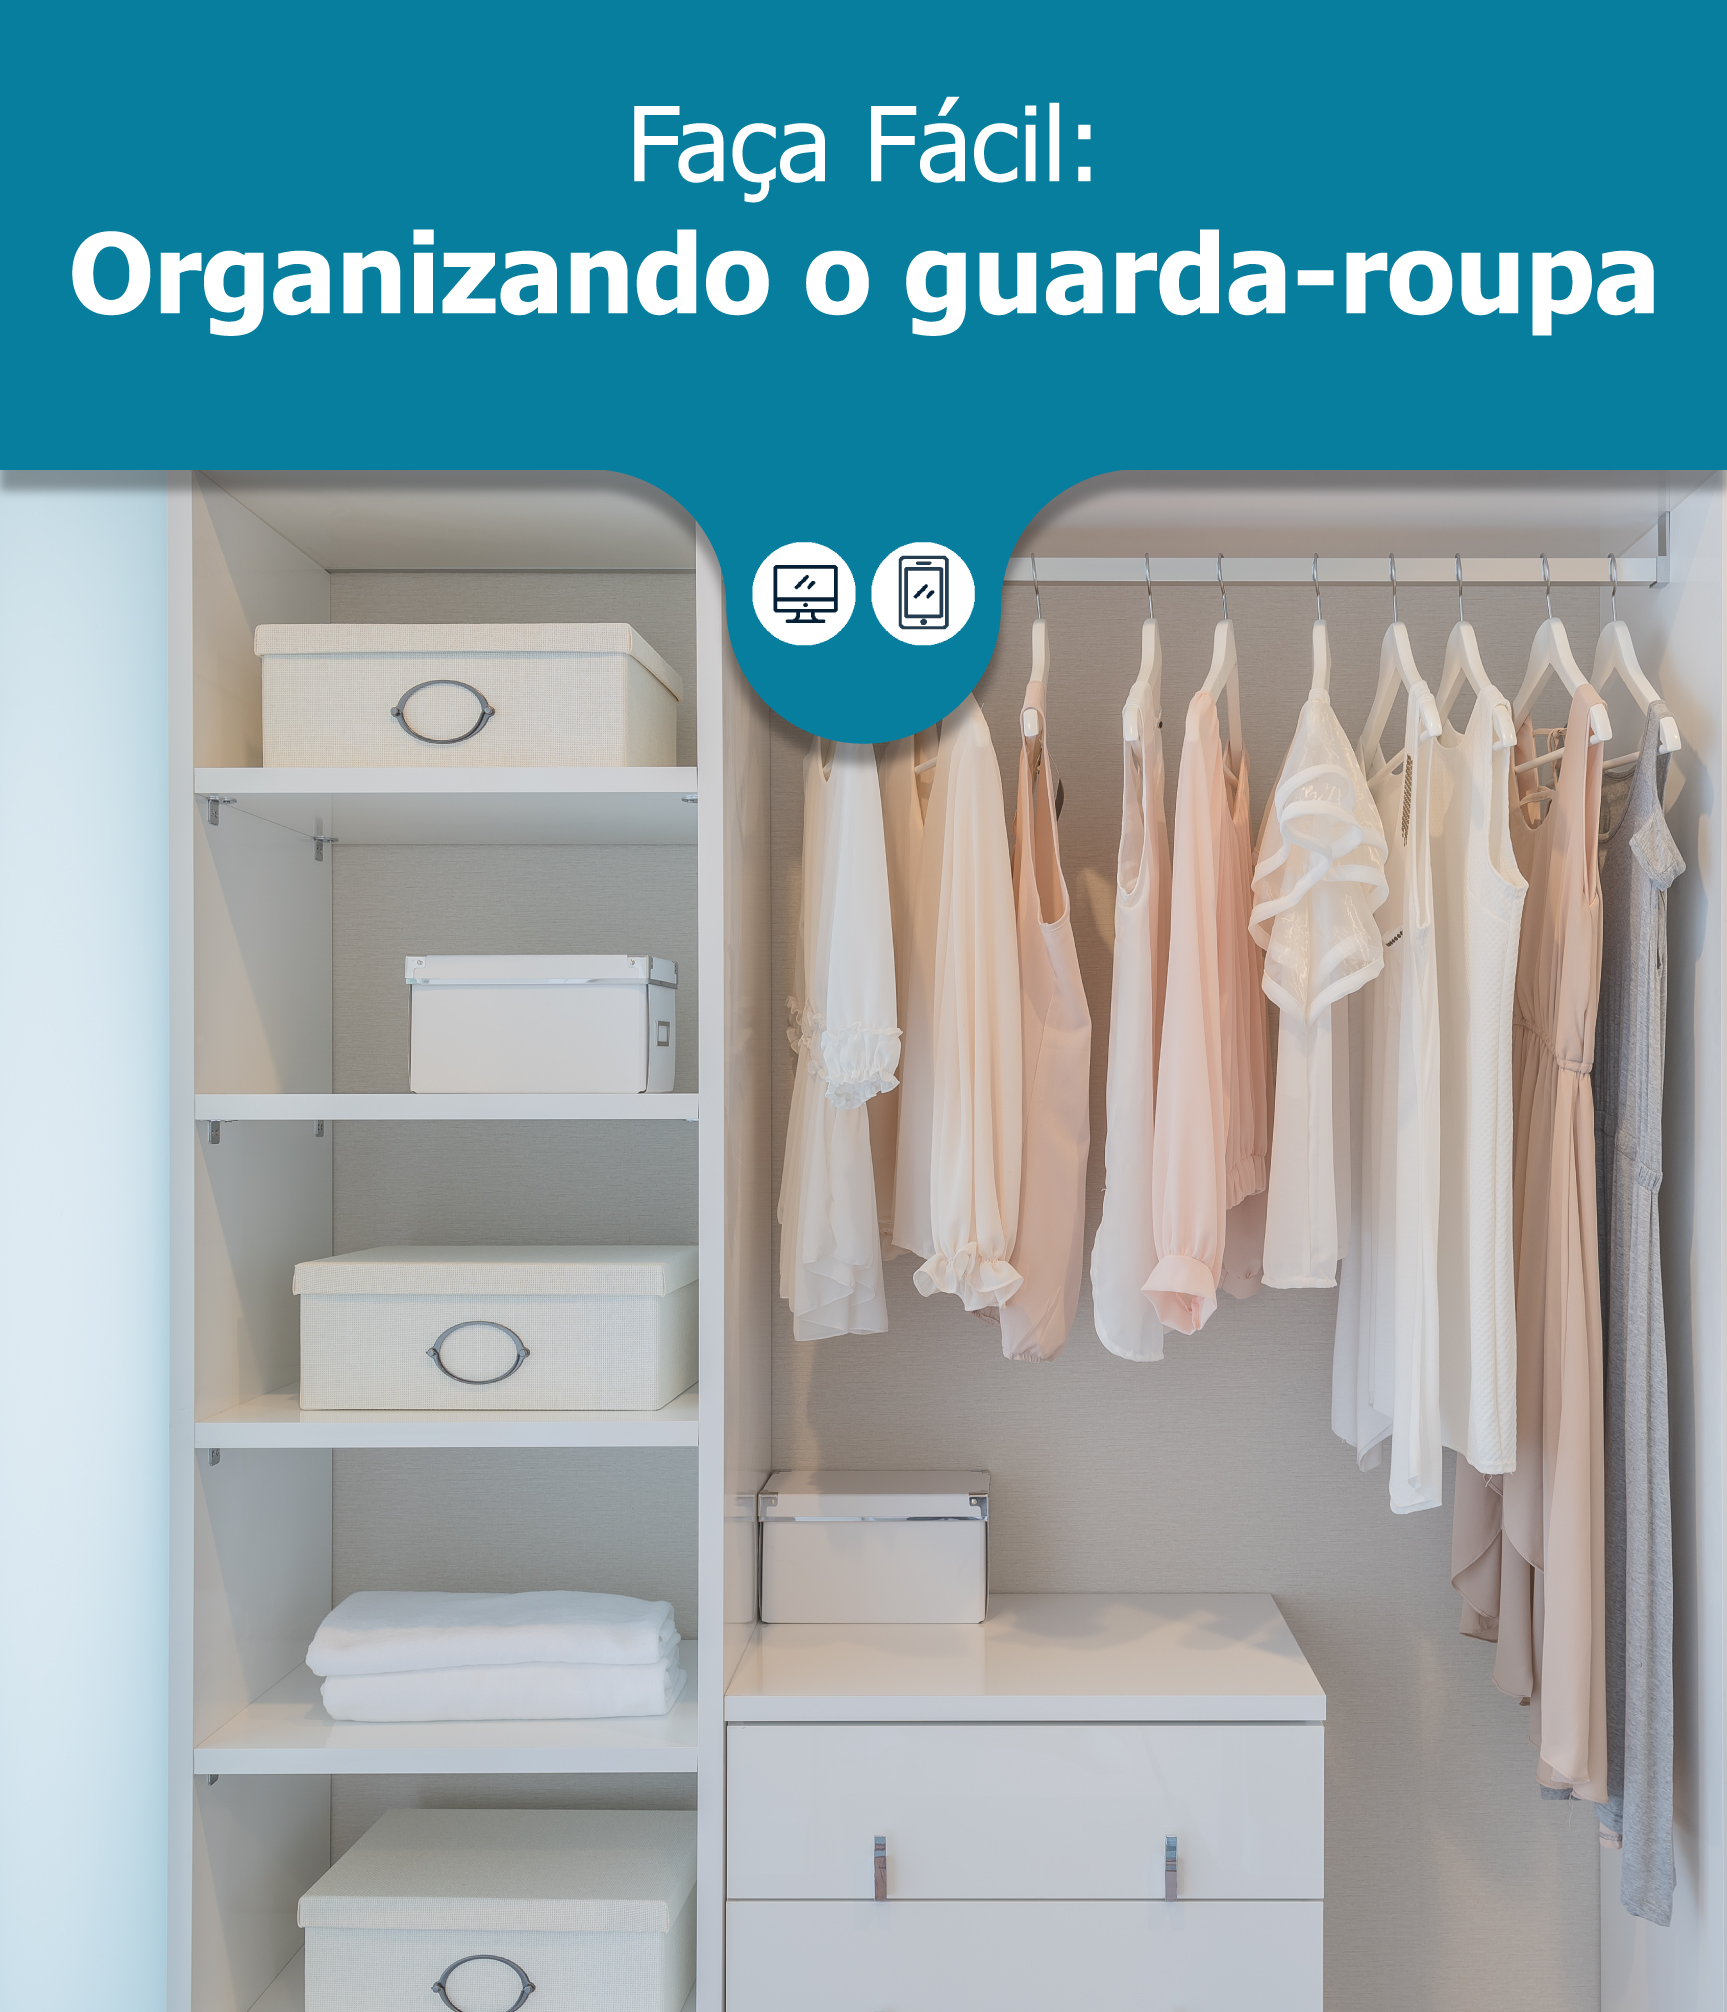 Faça Fácil - Organizando o guarda-roupa